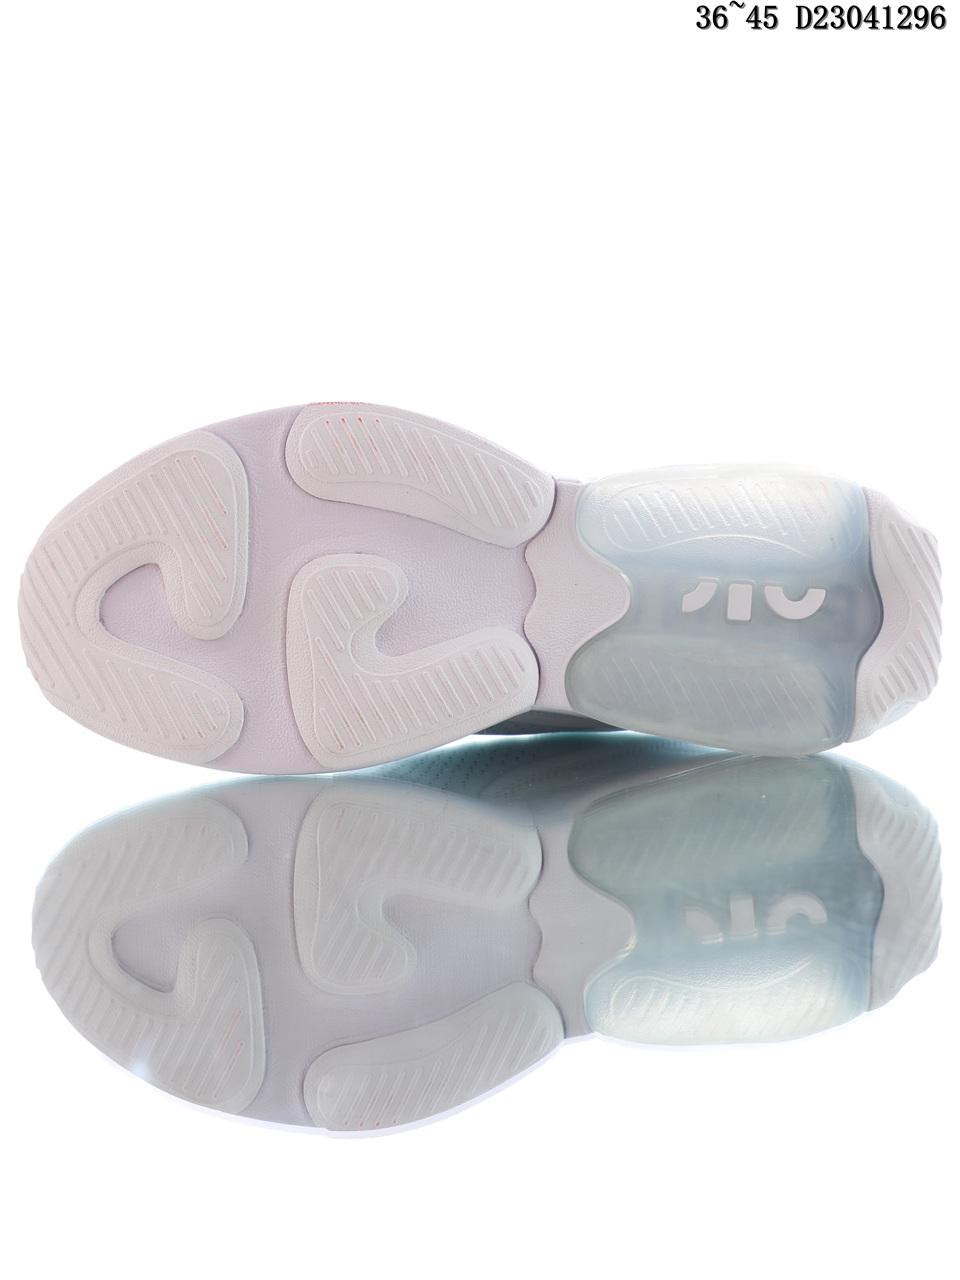 Nike Air Max Verona white cushioned running shoes Sole